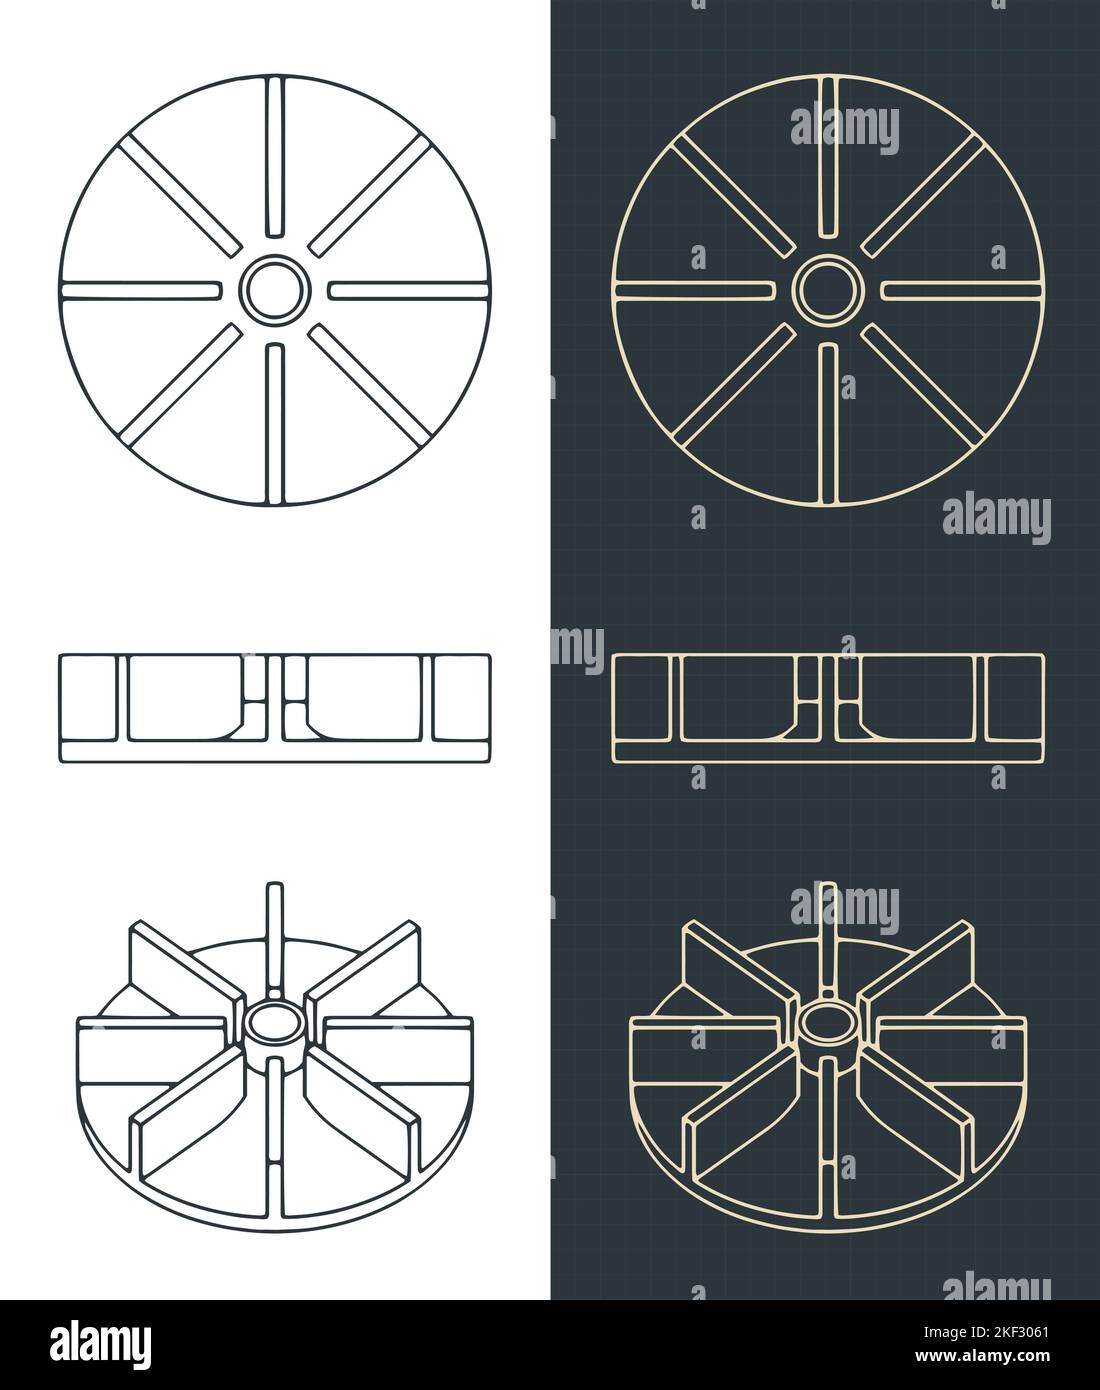 Stylized vector illustration of blueprints of water pump impeller blueprints Stock Vector